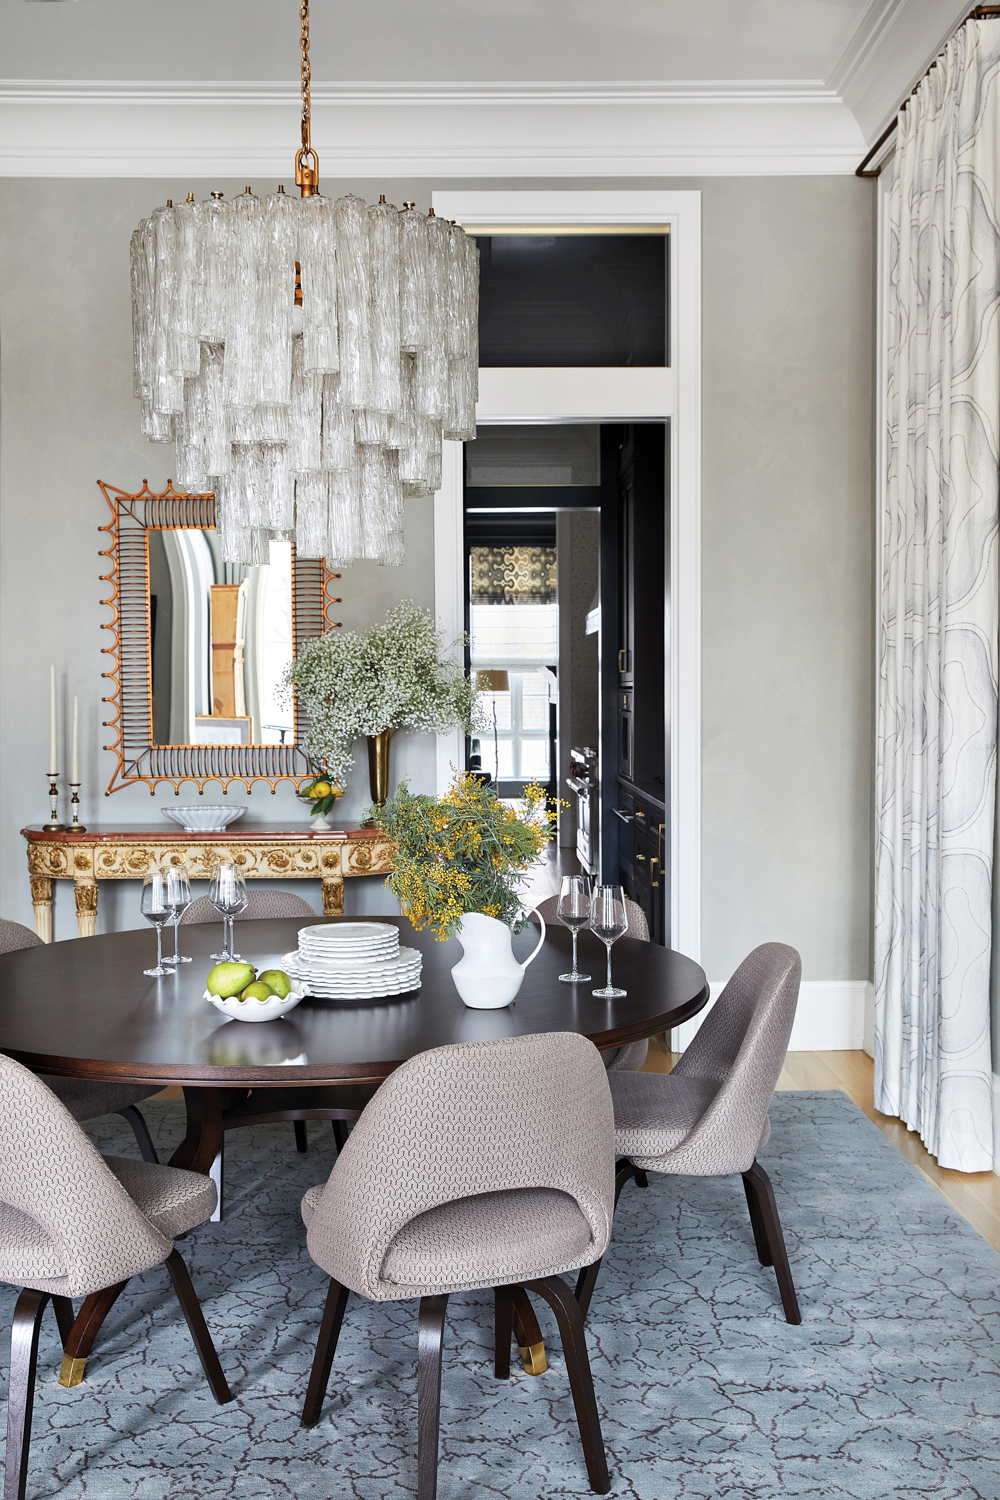 Murano-glass chandelier hangs above a...